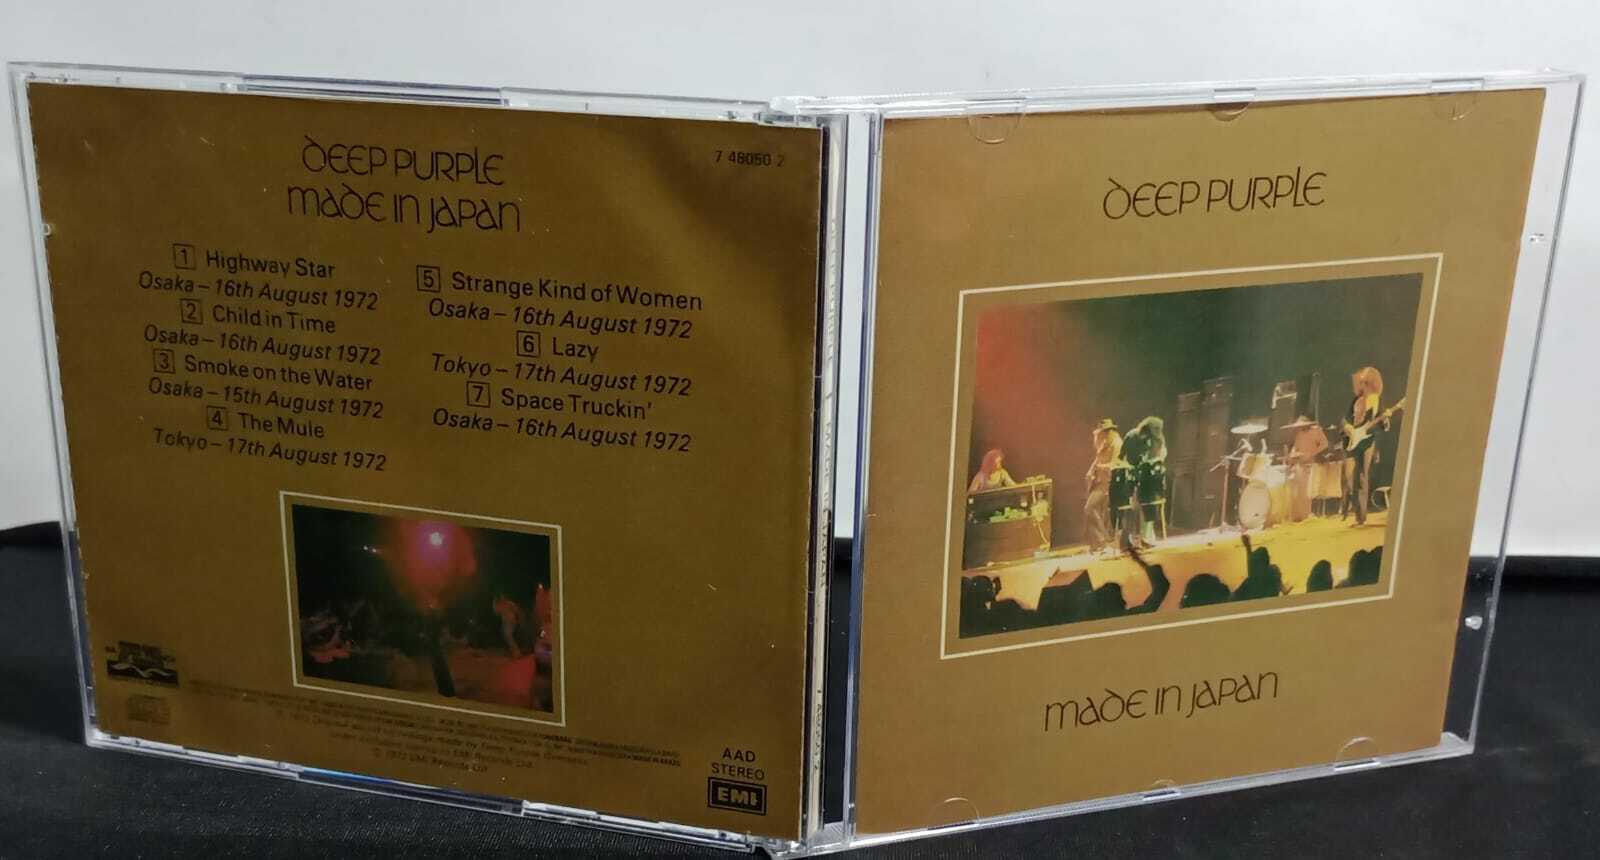 CD - Deep Purple - Made in Japan